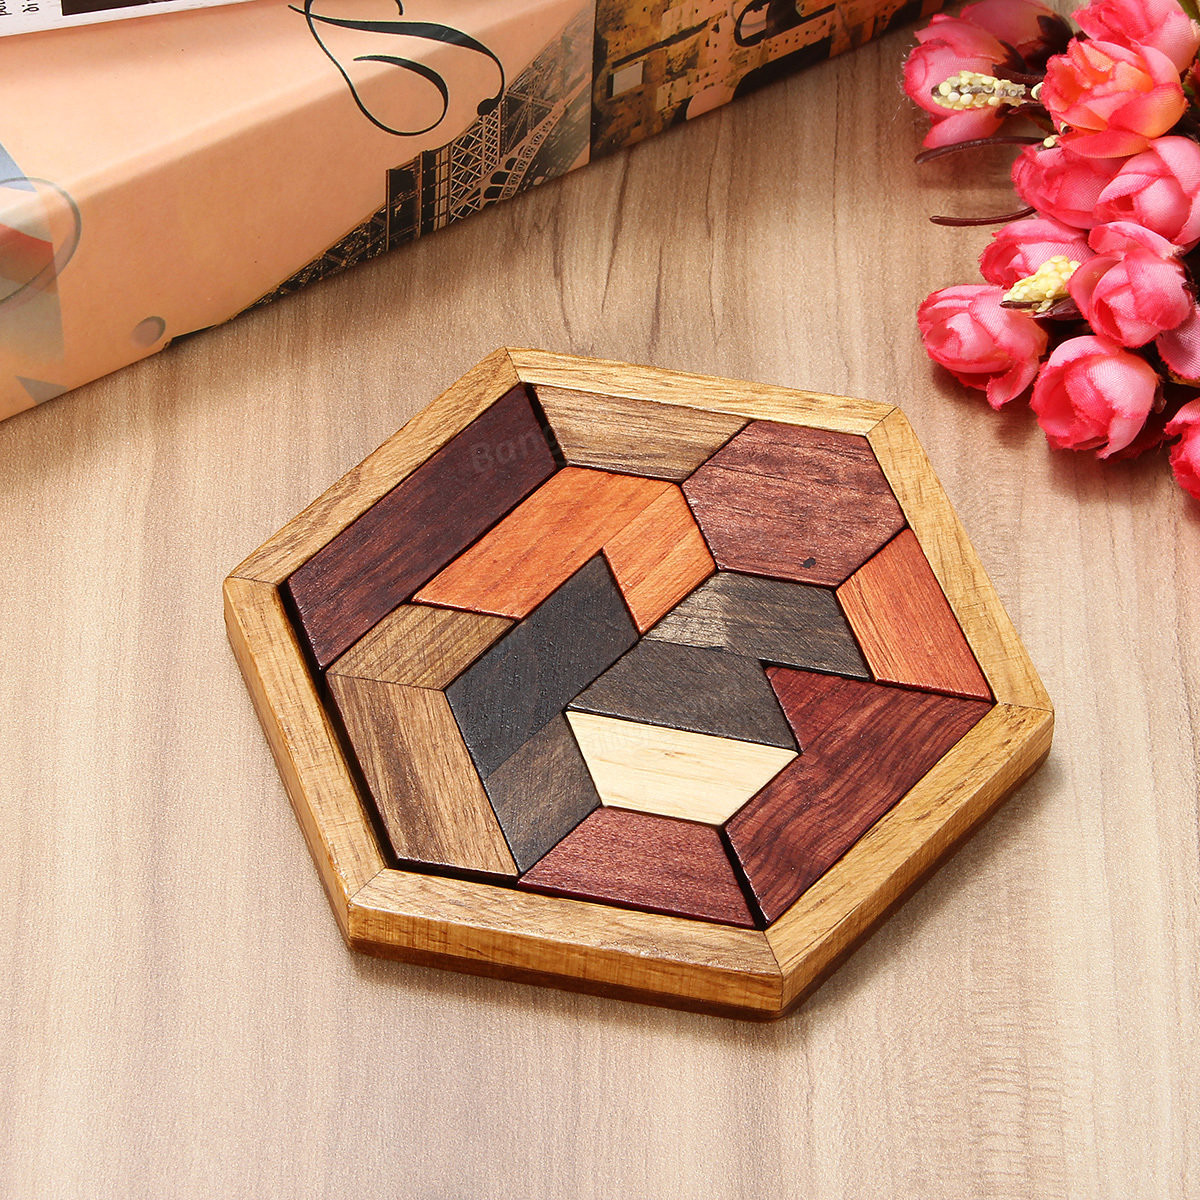 DIY Wooden Puzzle
 diy 9pcs wooden iq game jigsaw intelligent tangram brain